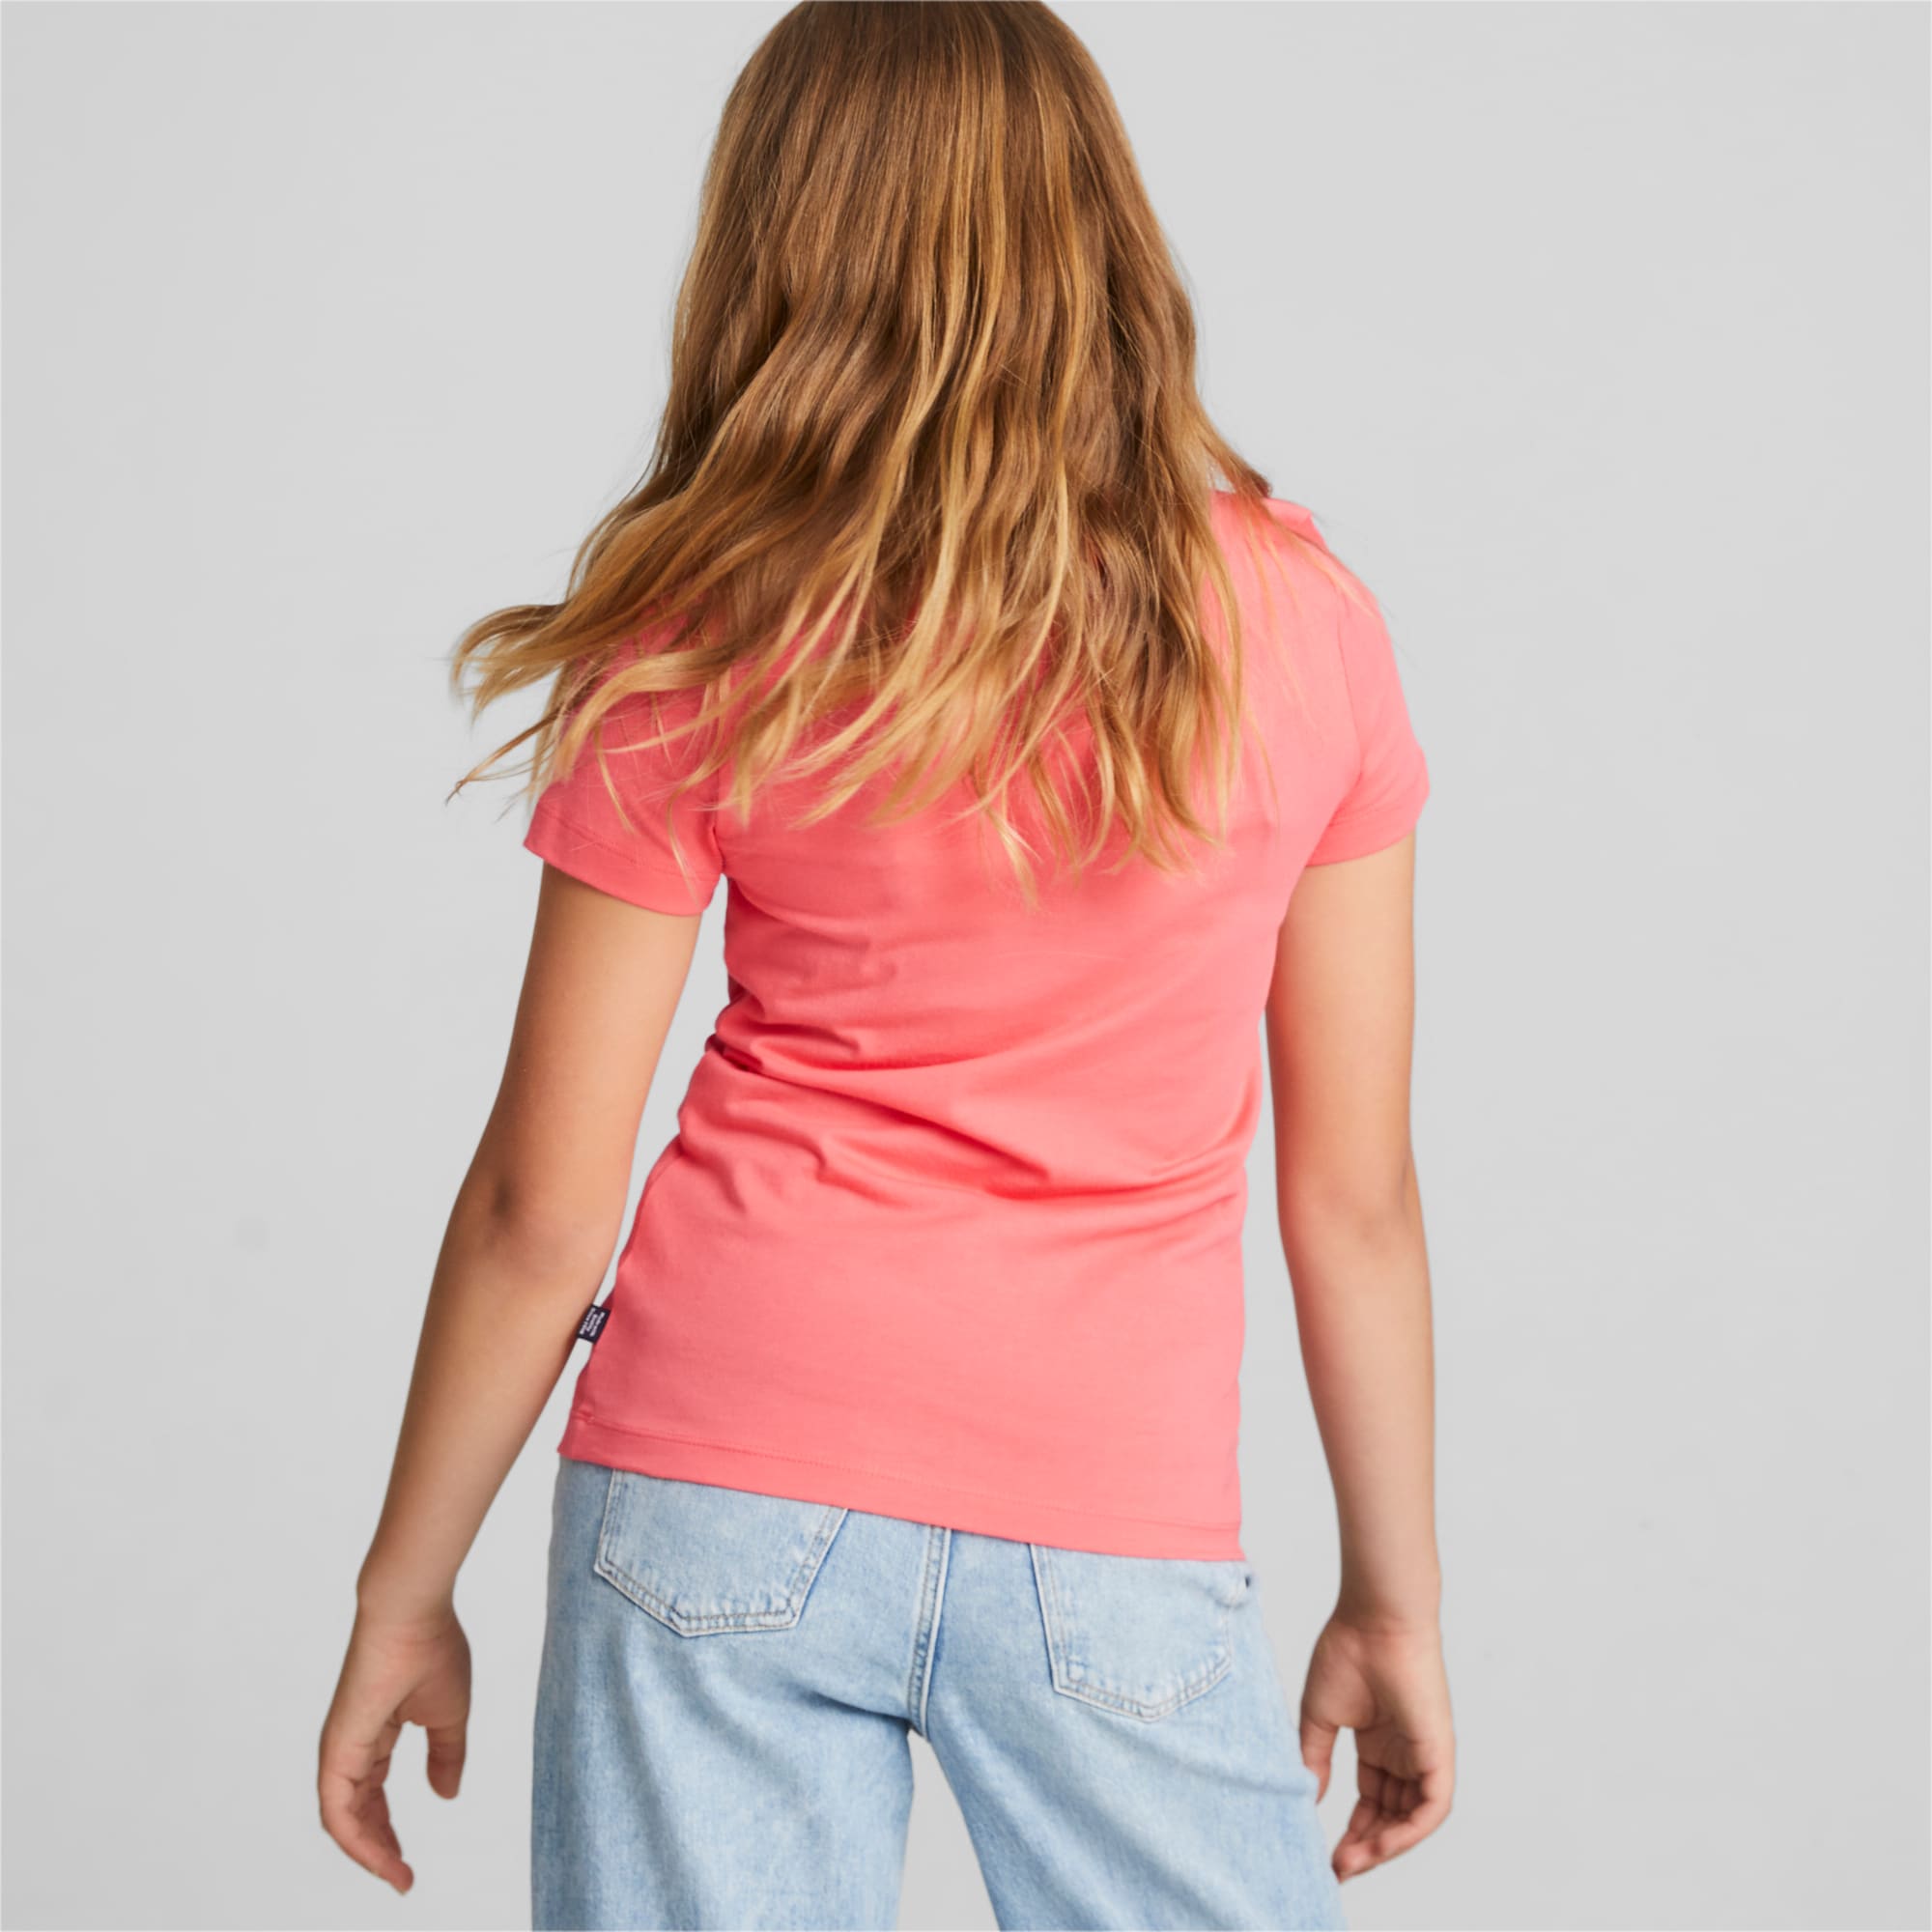 PUMA Essentials Logo Youth T-Shirt, Electric Blush, Size 110, Clothing